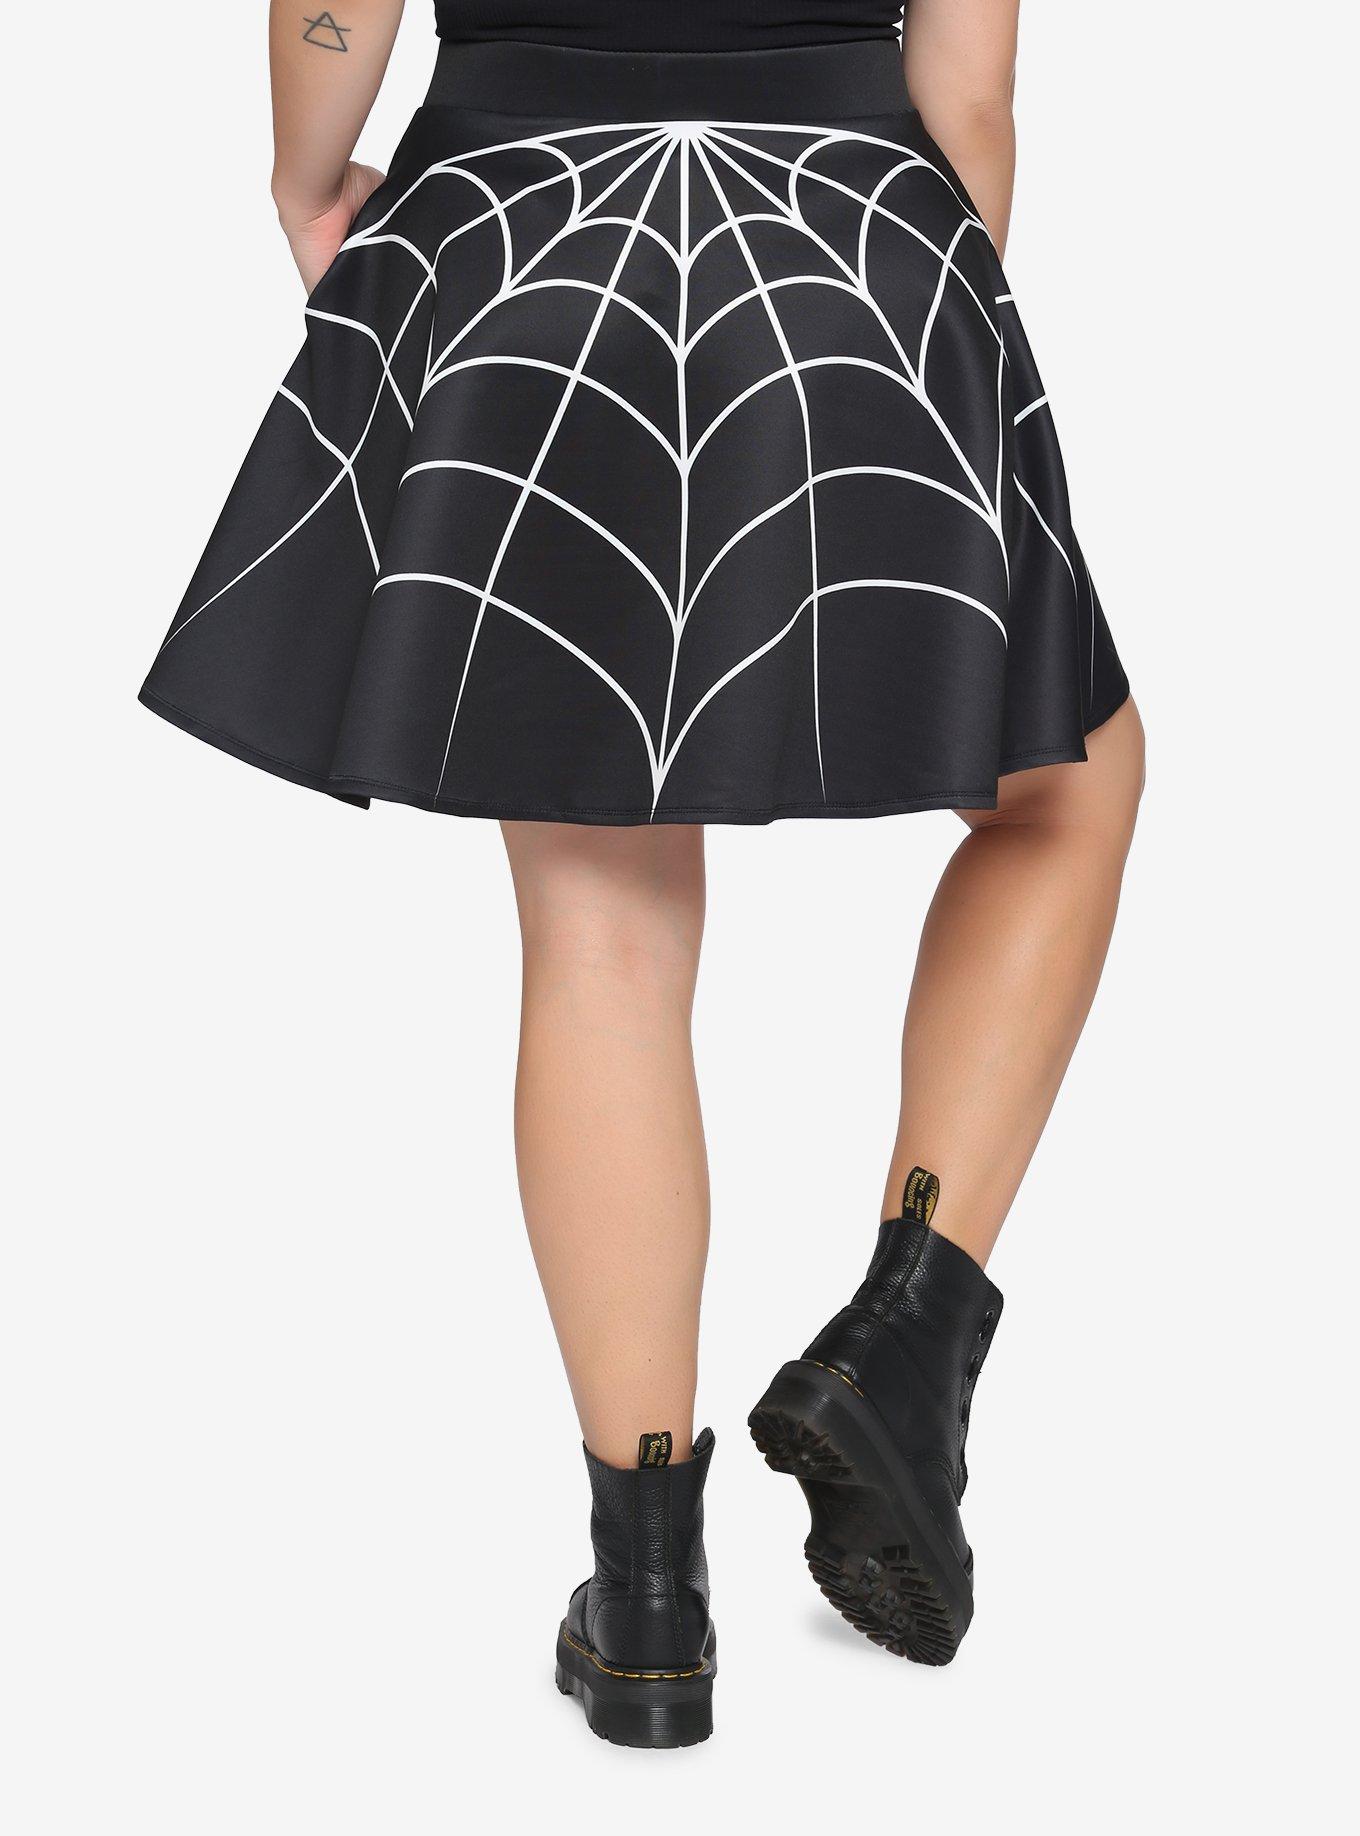 Spiderweb Skirt Plus Size, BLACK, alternate